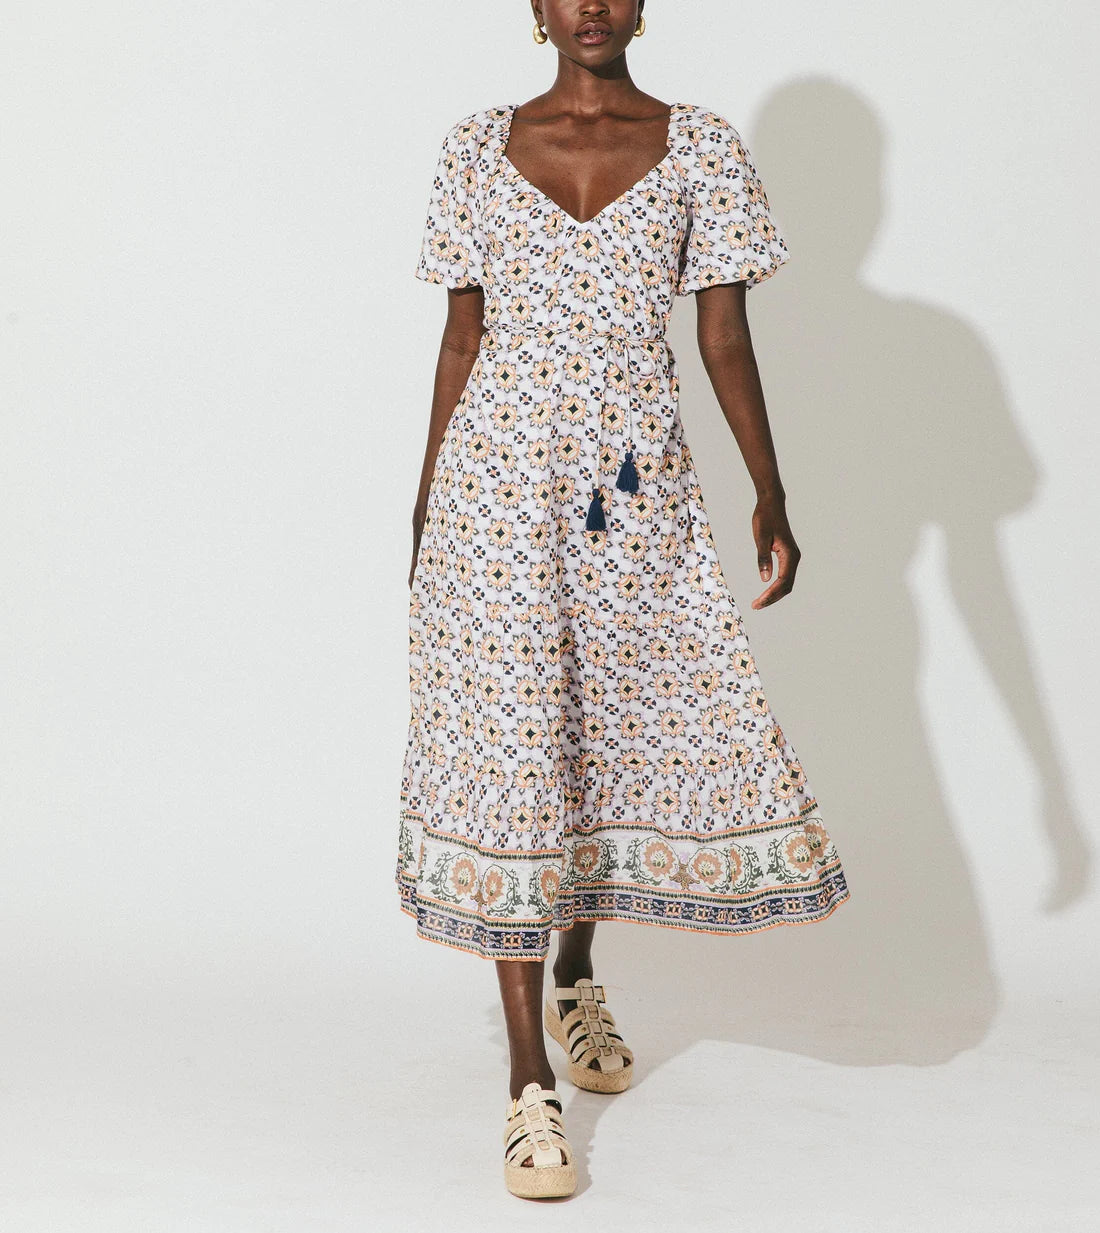 Paula Midi Dress in marrakesh print by Cleobella